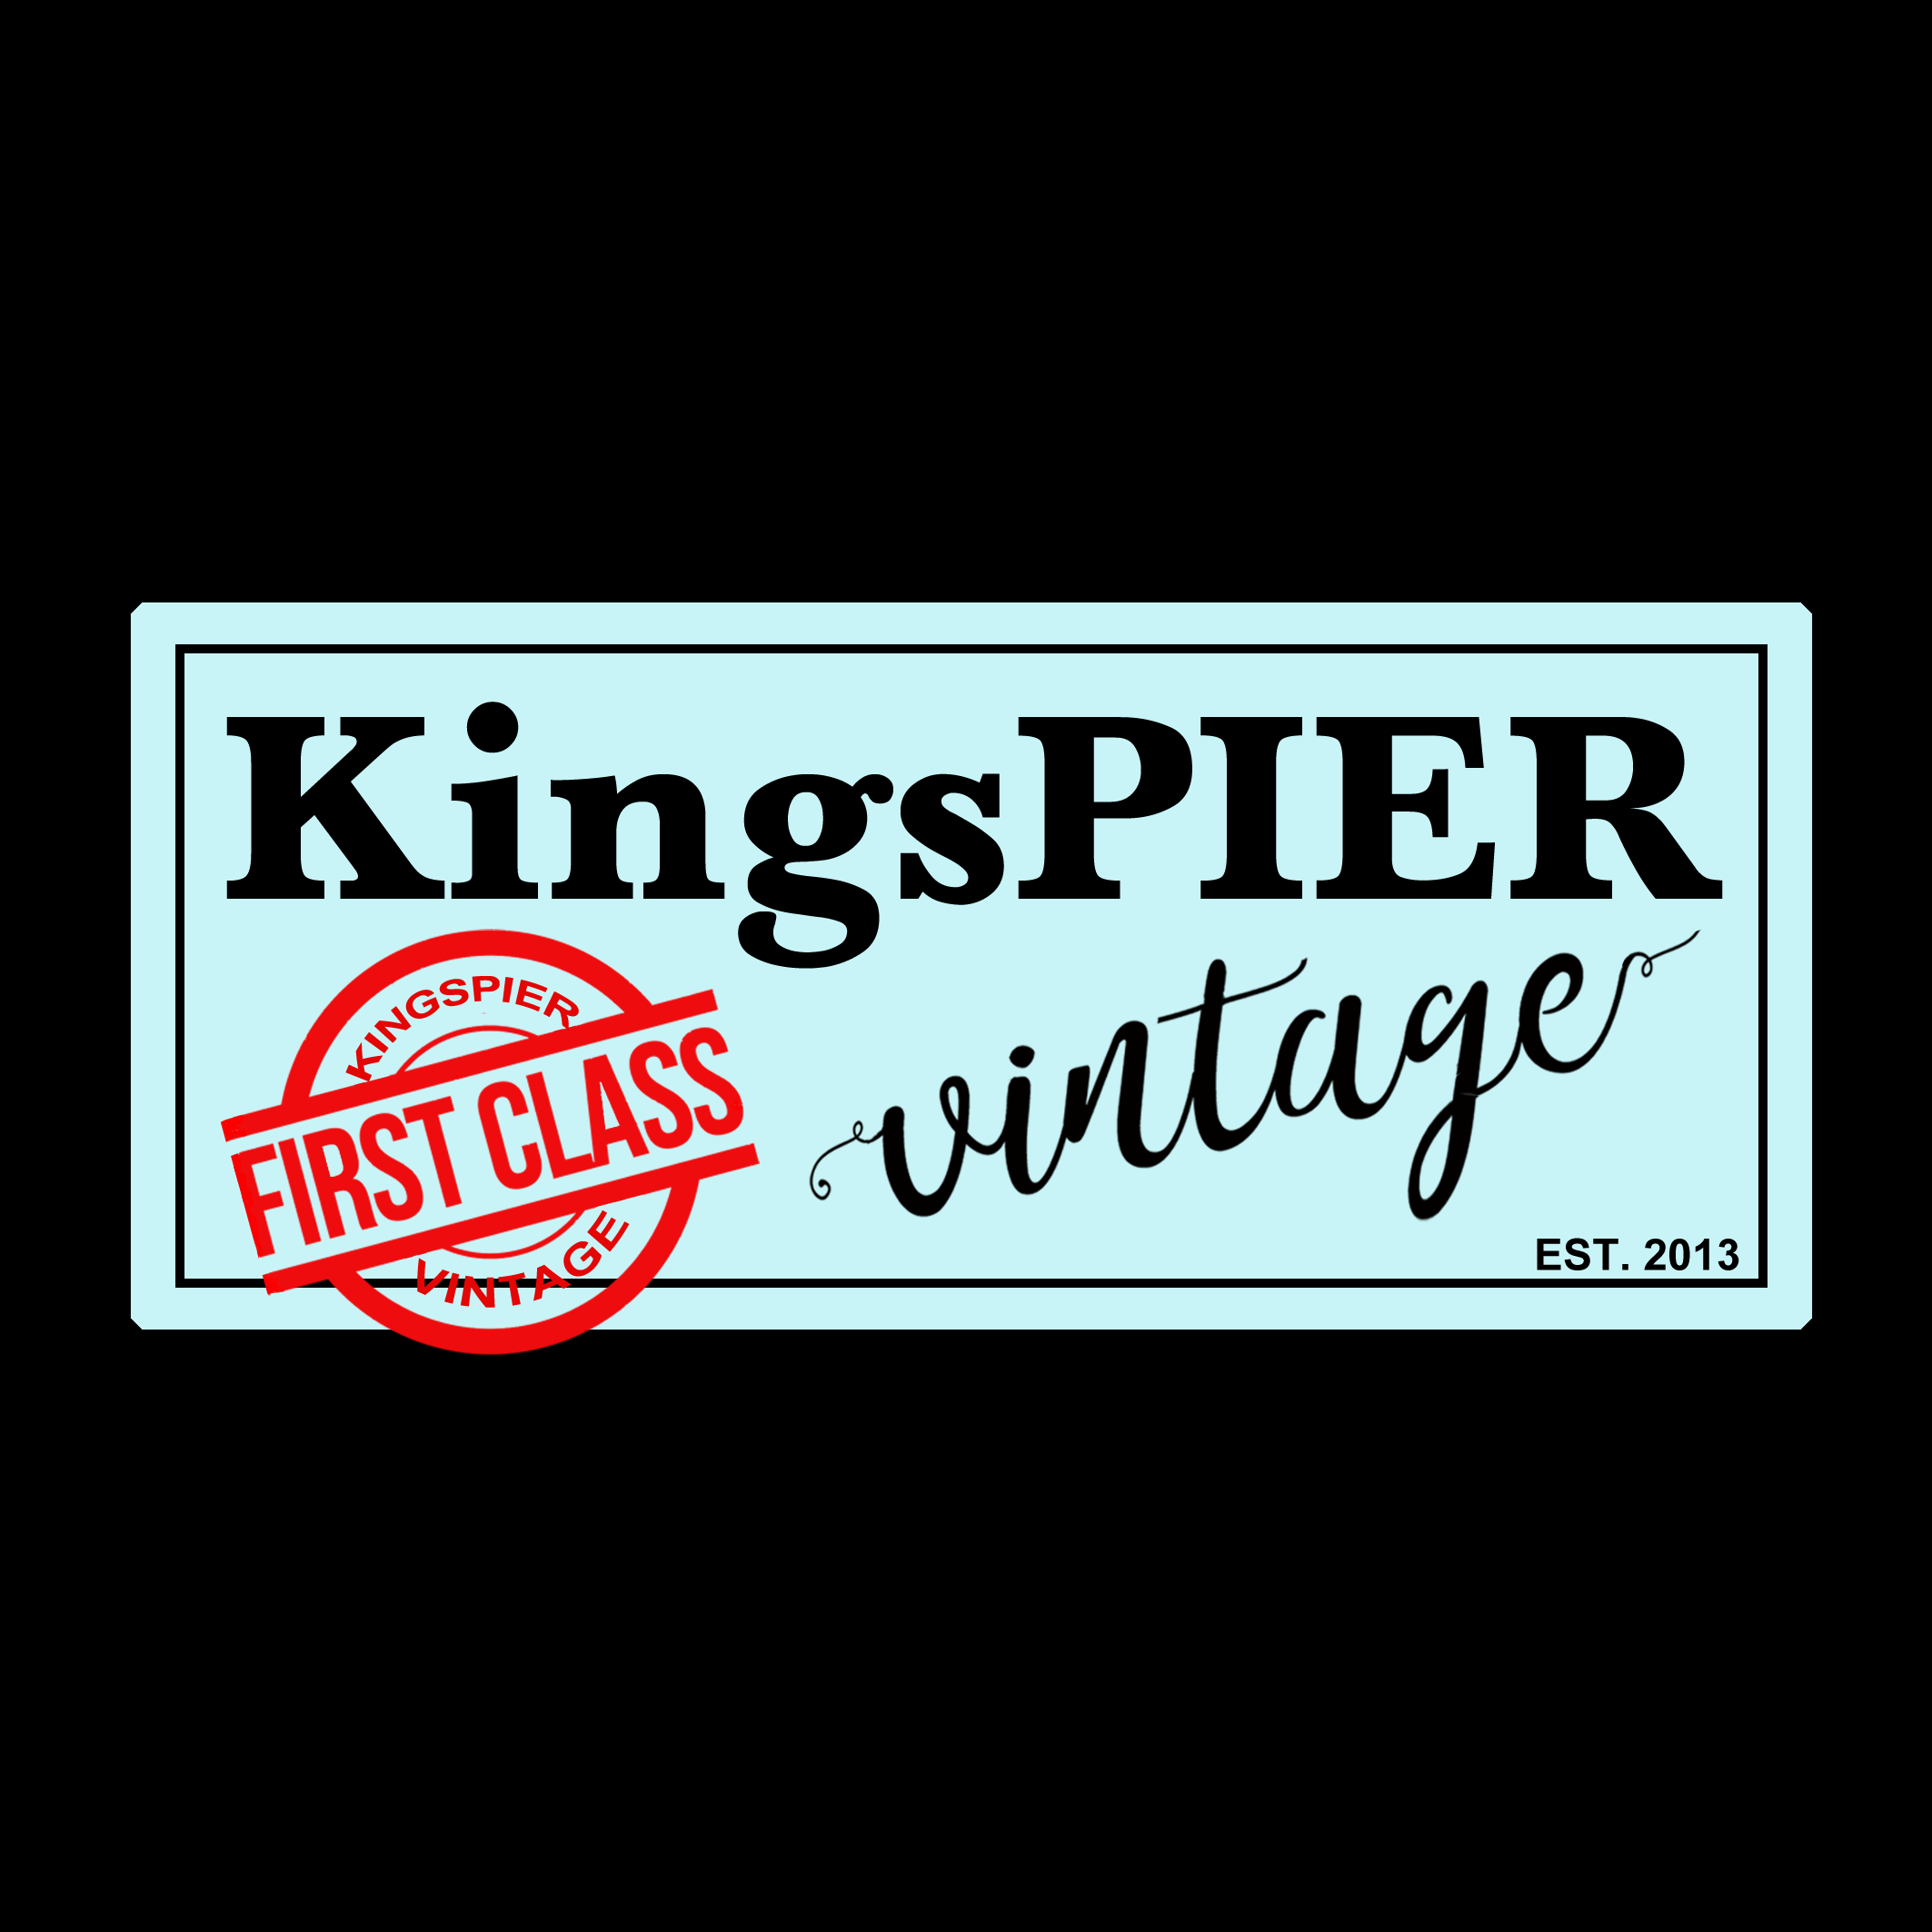 Products – KingsPIER vintage